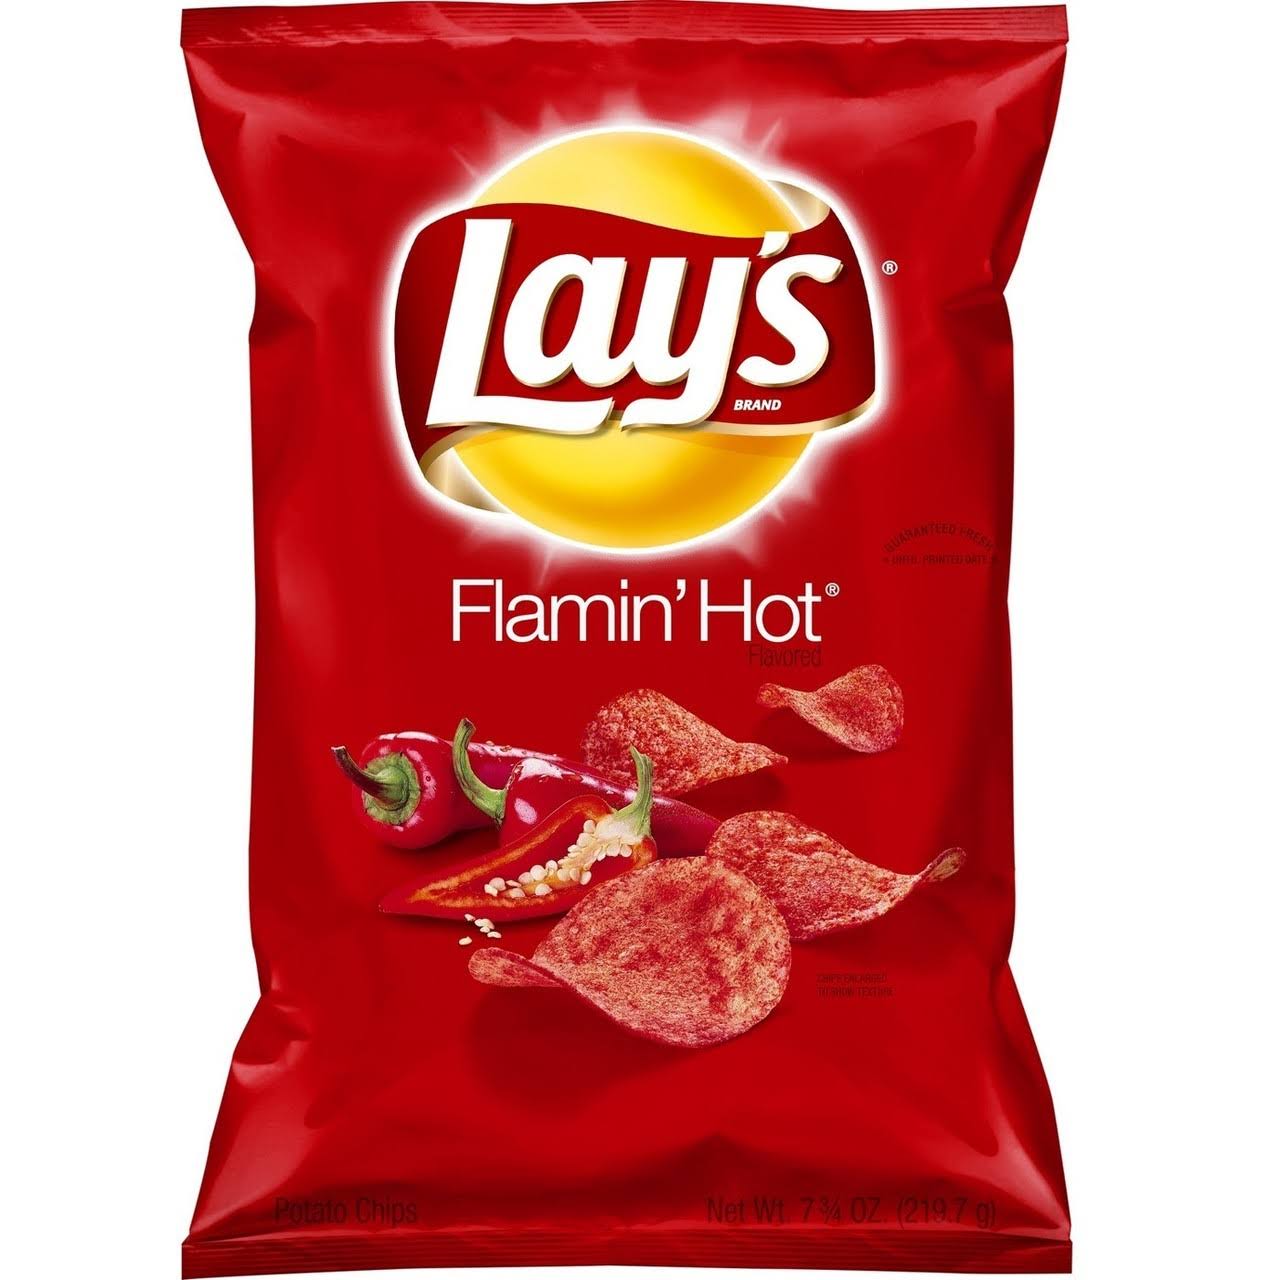 Lay's Potato Chips - Flamin' Hot Flavored, 7.75oz